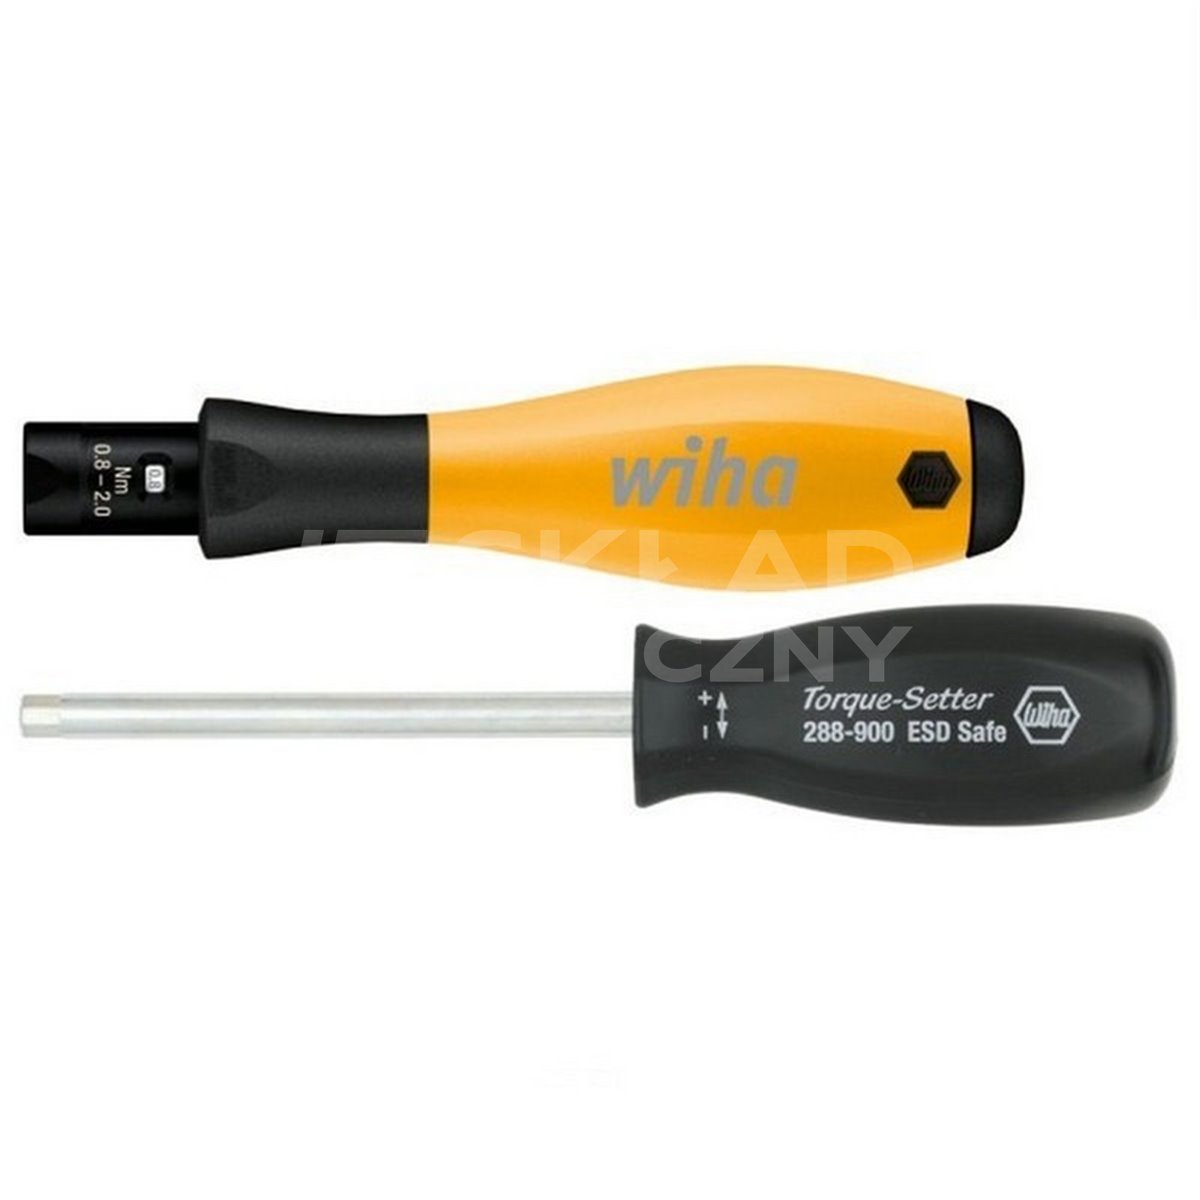 TorqueVario-S ESD 2882 0.5-2.0 131mm Wiha 26866 is a precision torque screwdriver.